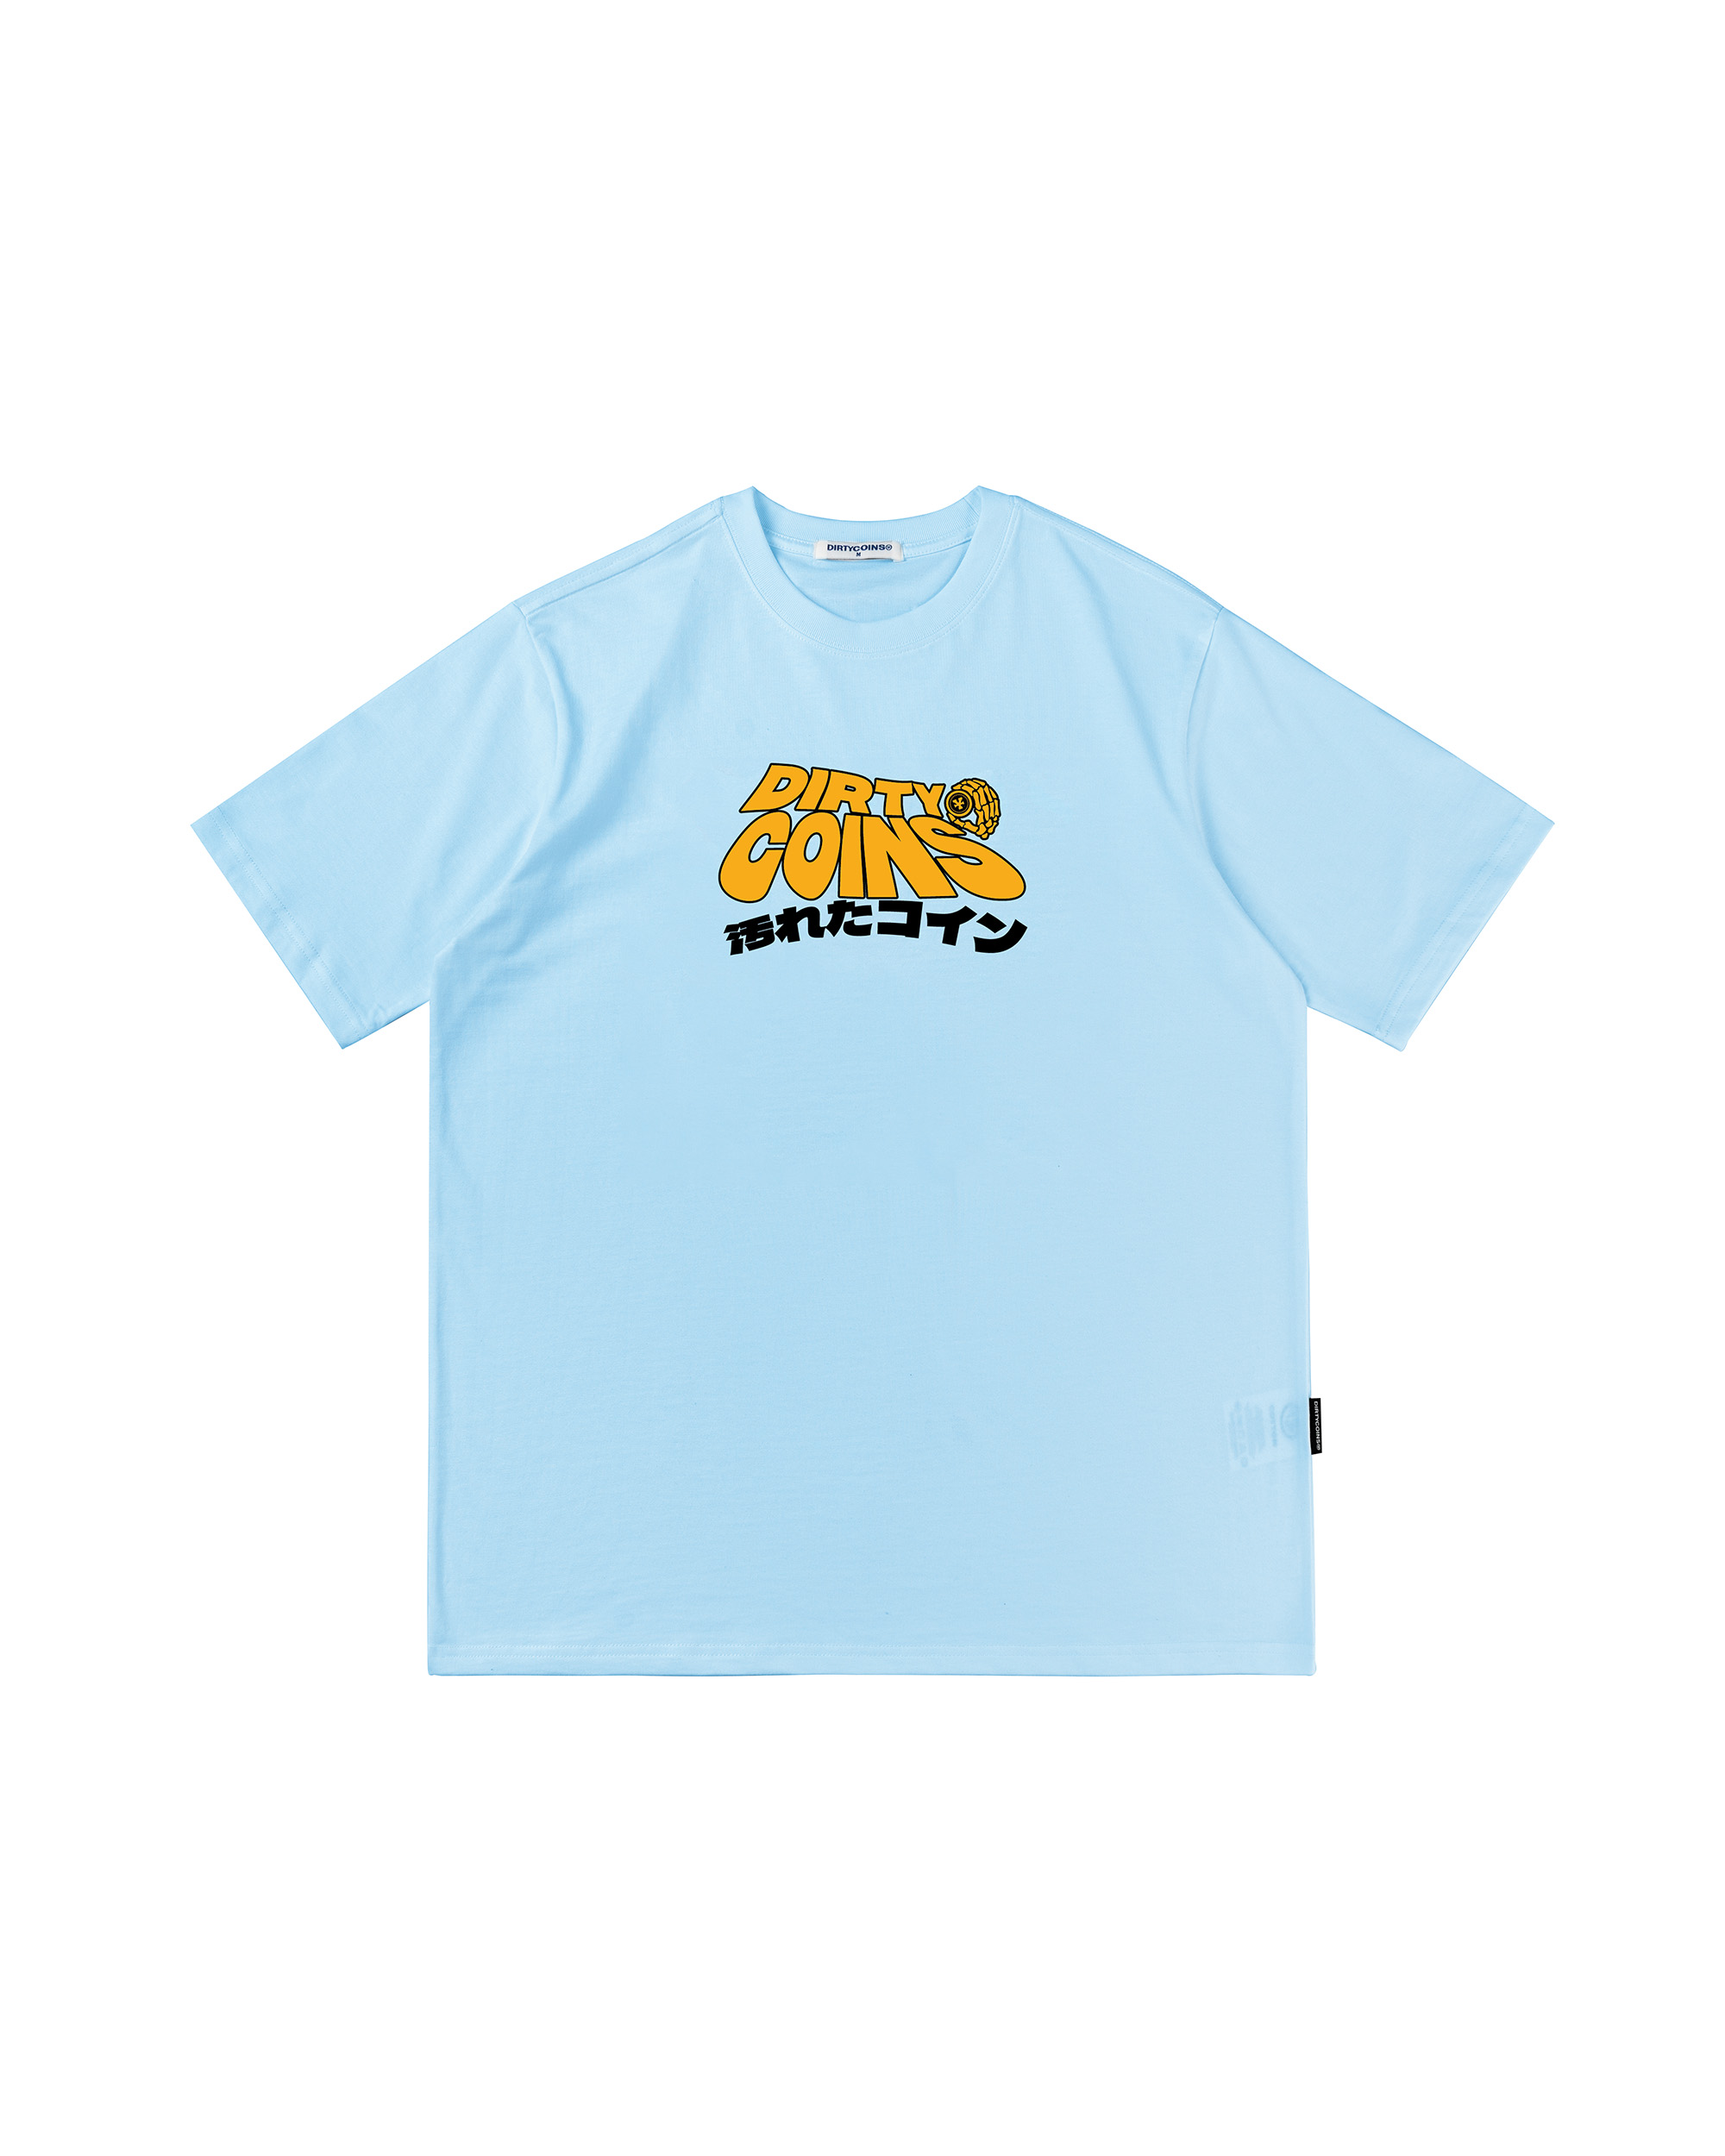 DirtyCoins Wavy Logo T-Shirt - Baby Blue